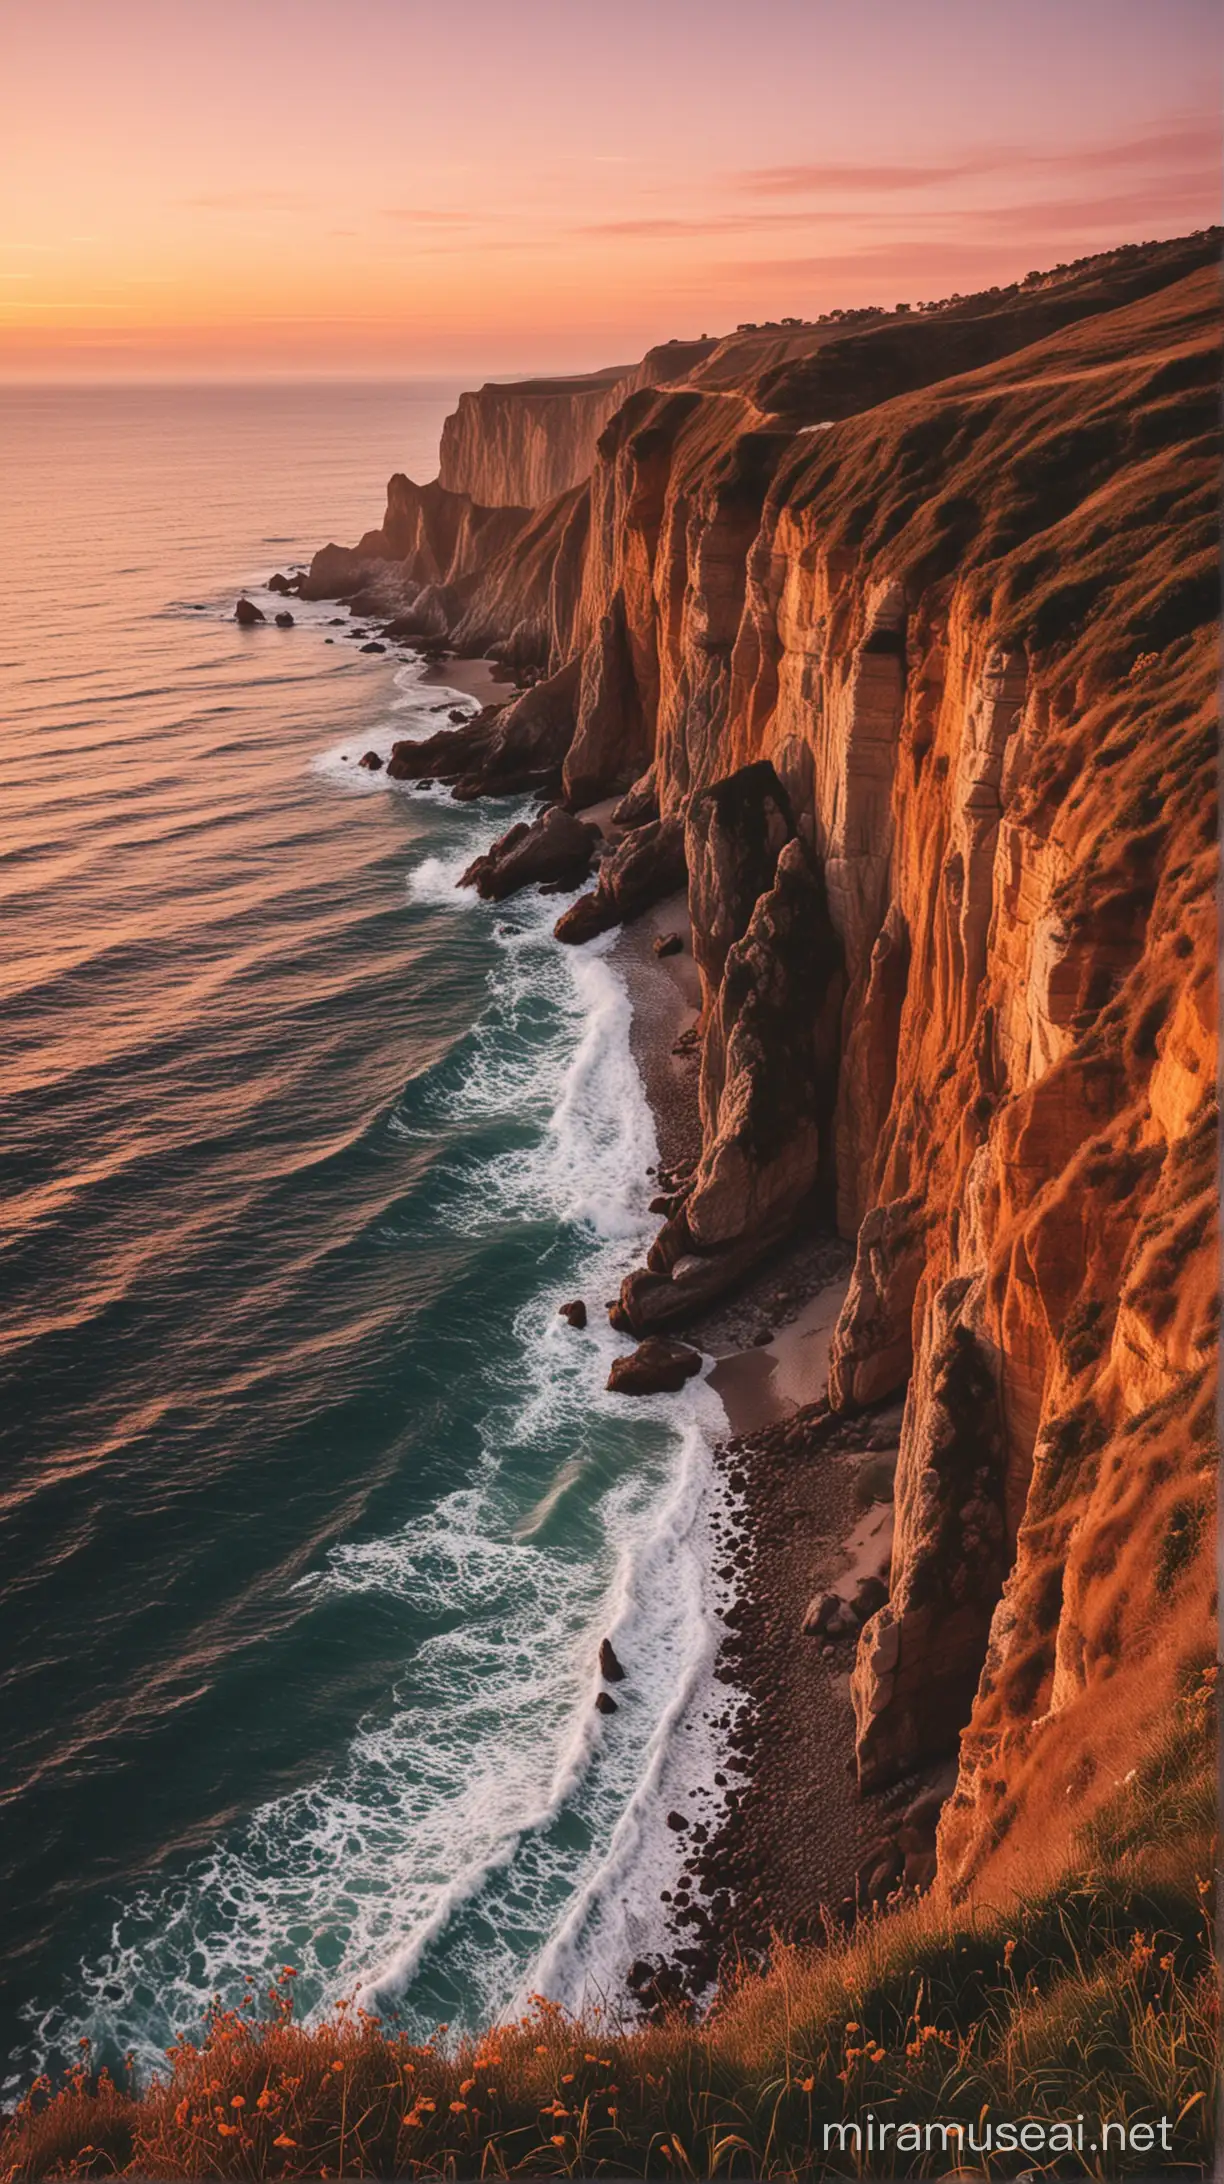 a wonderful photograph from a sunet near a ocean cliff , serne feelings, nostalgic vibes, wonderful colors